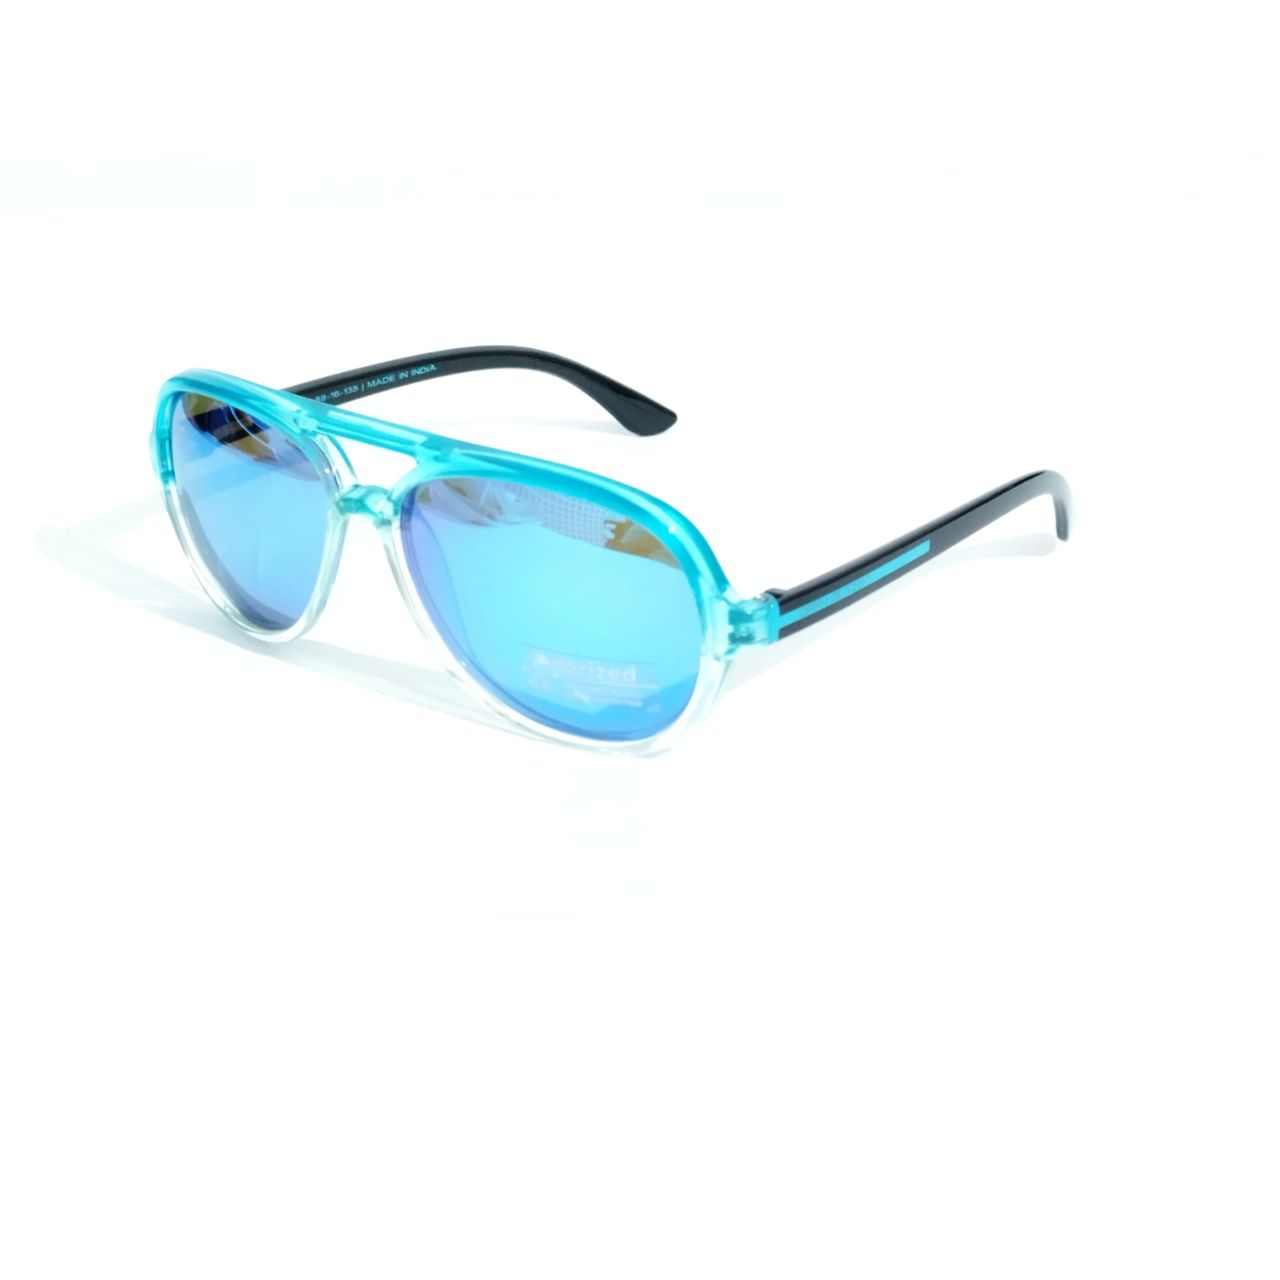 Marc Jacobs Sunglasses Duplicate Online DVMJ16-1 - Designers Village